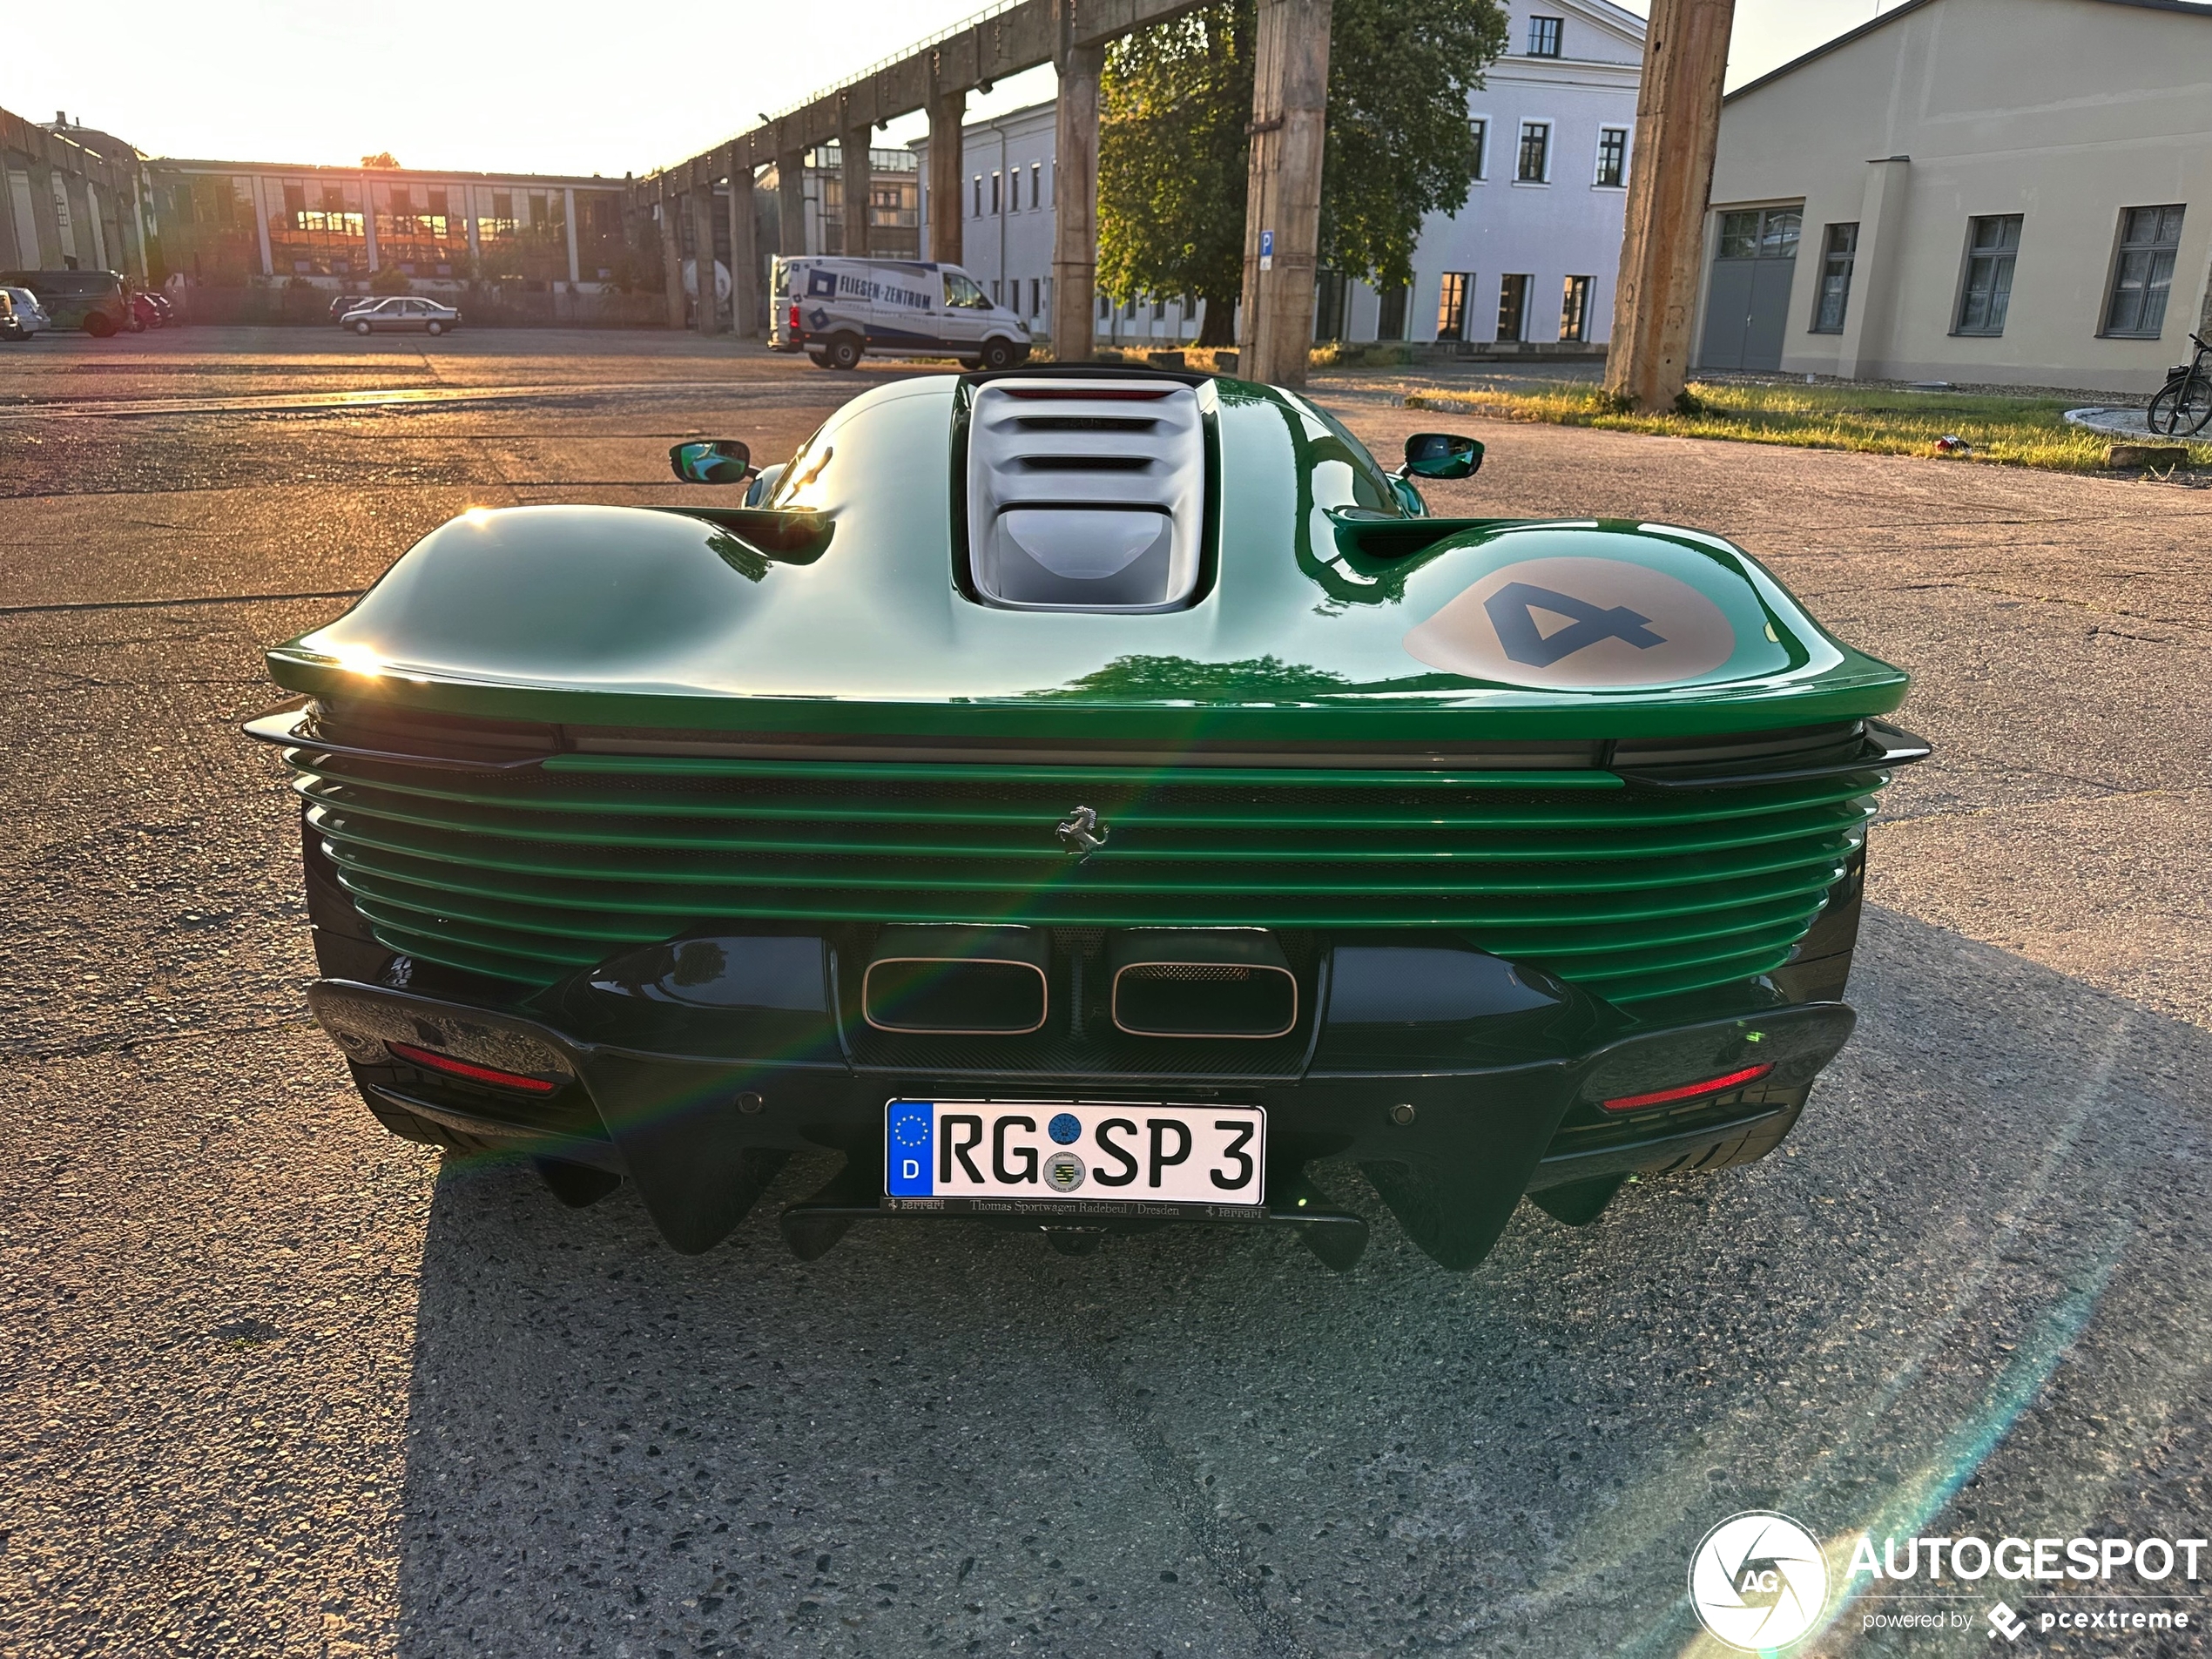 Green Daytona SP3 shows up in Dresden